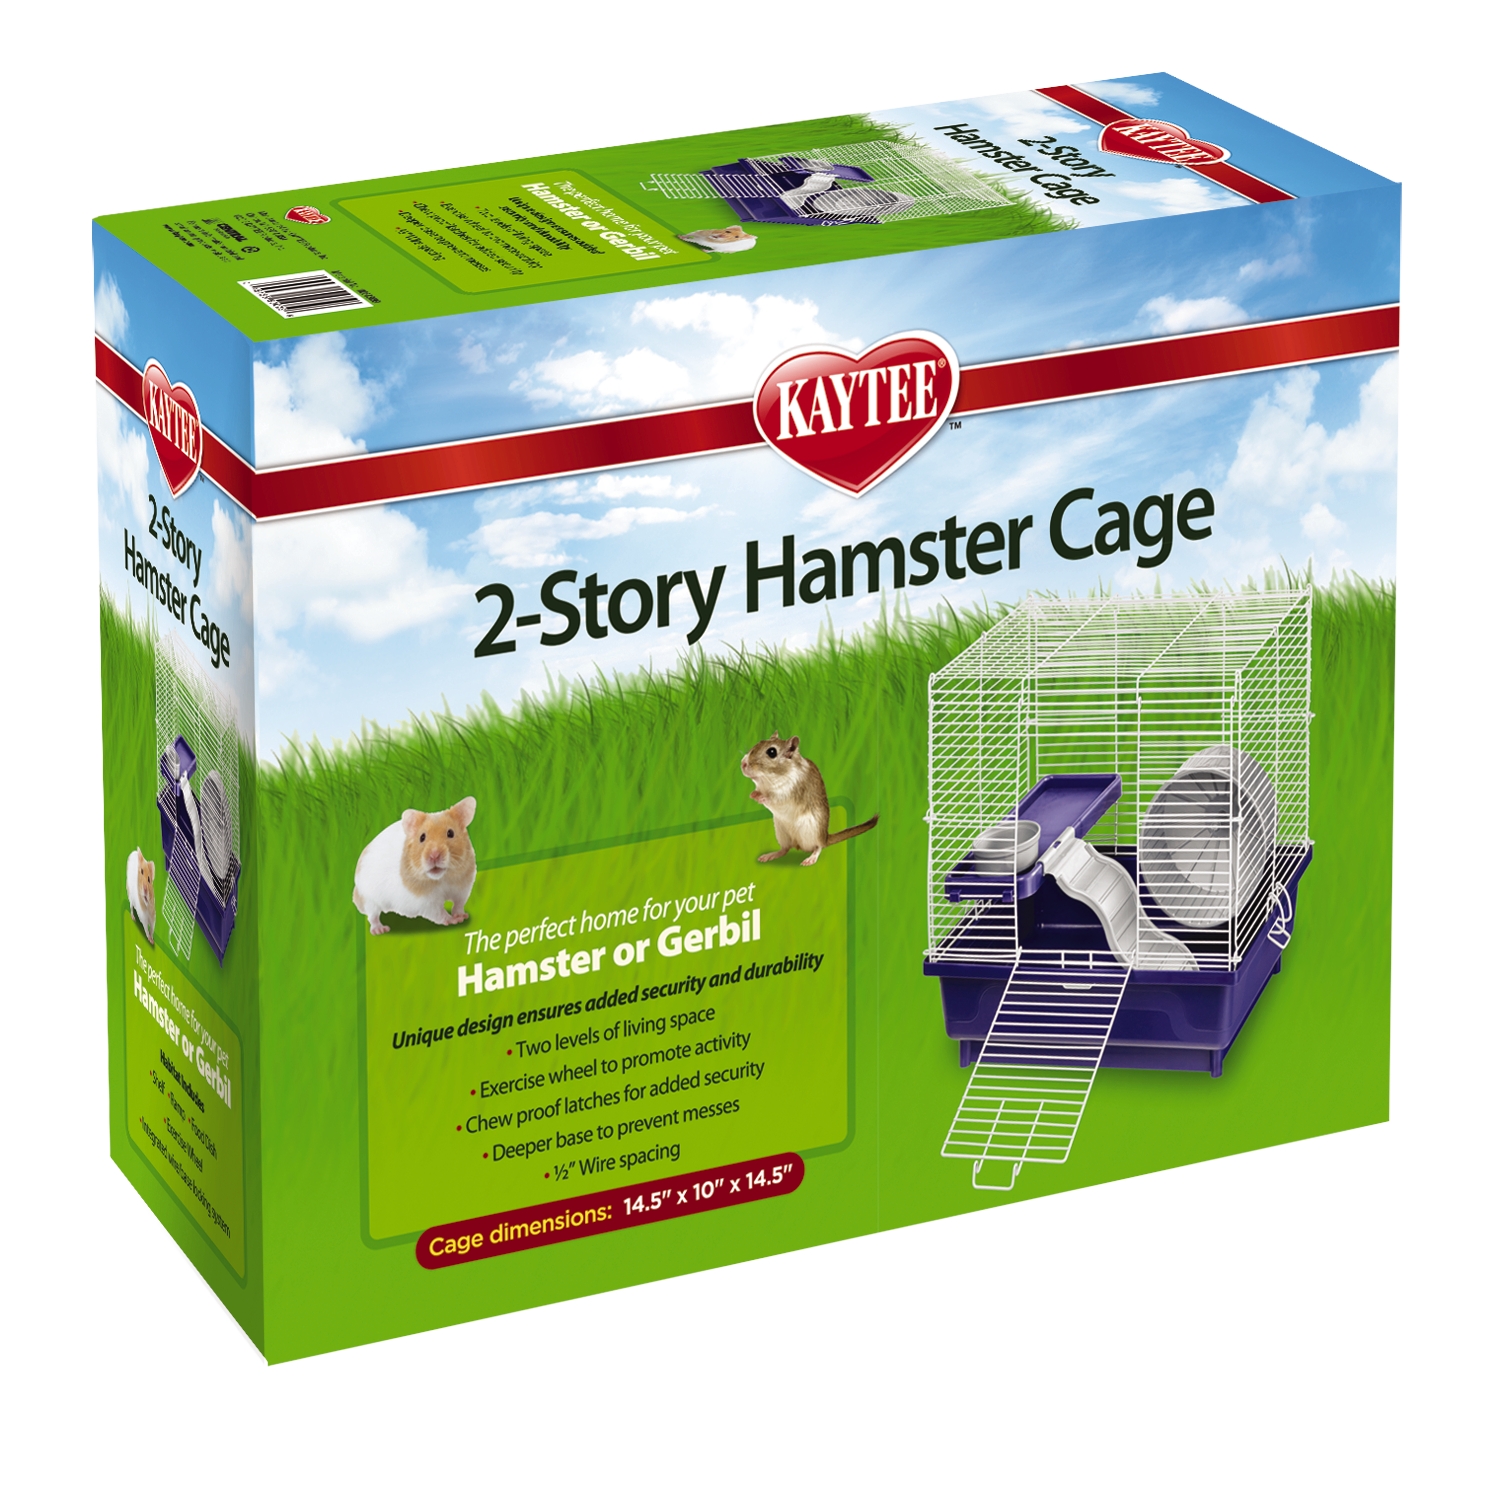 Kaytee 2-Story Hamster Cage